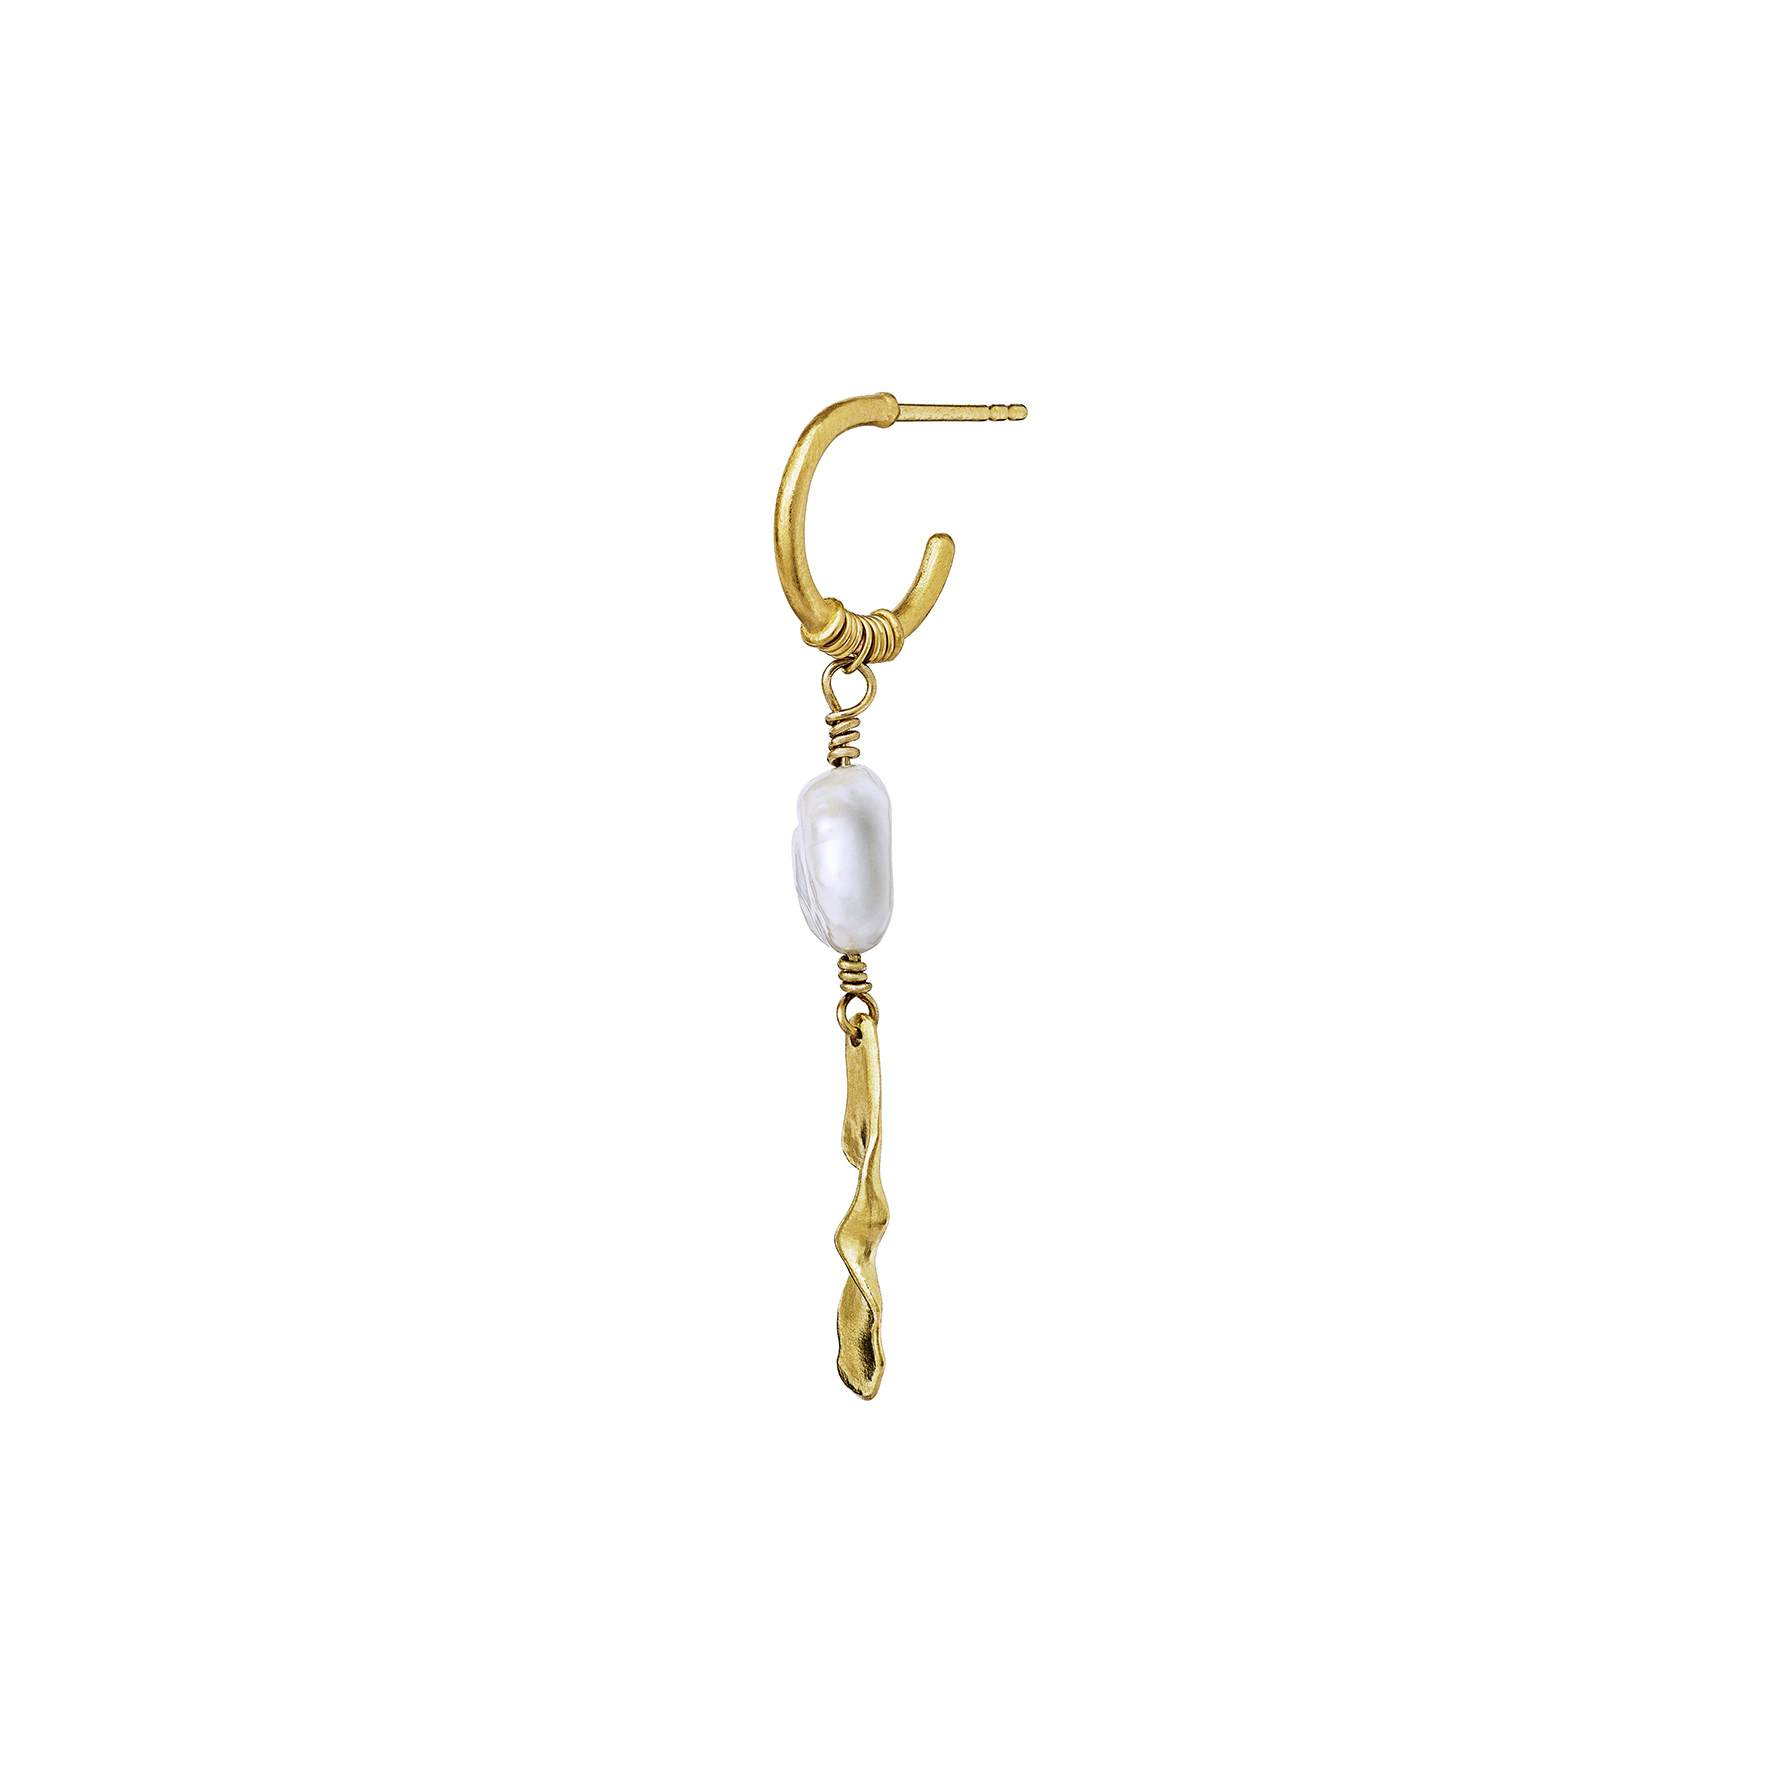 Alfie Earring von Maanesten in Vergoldet-Silber Sterling 925|Freshwater Pearl